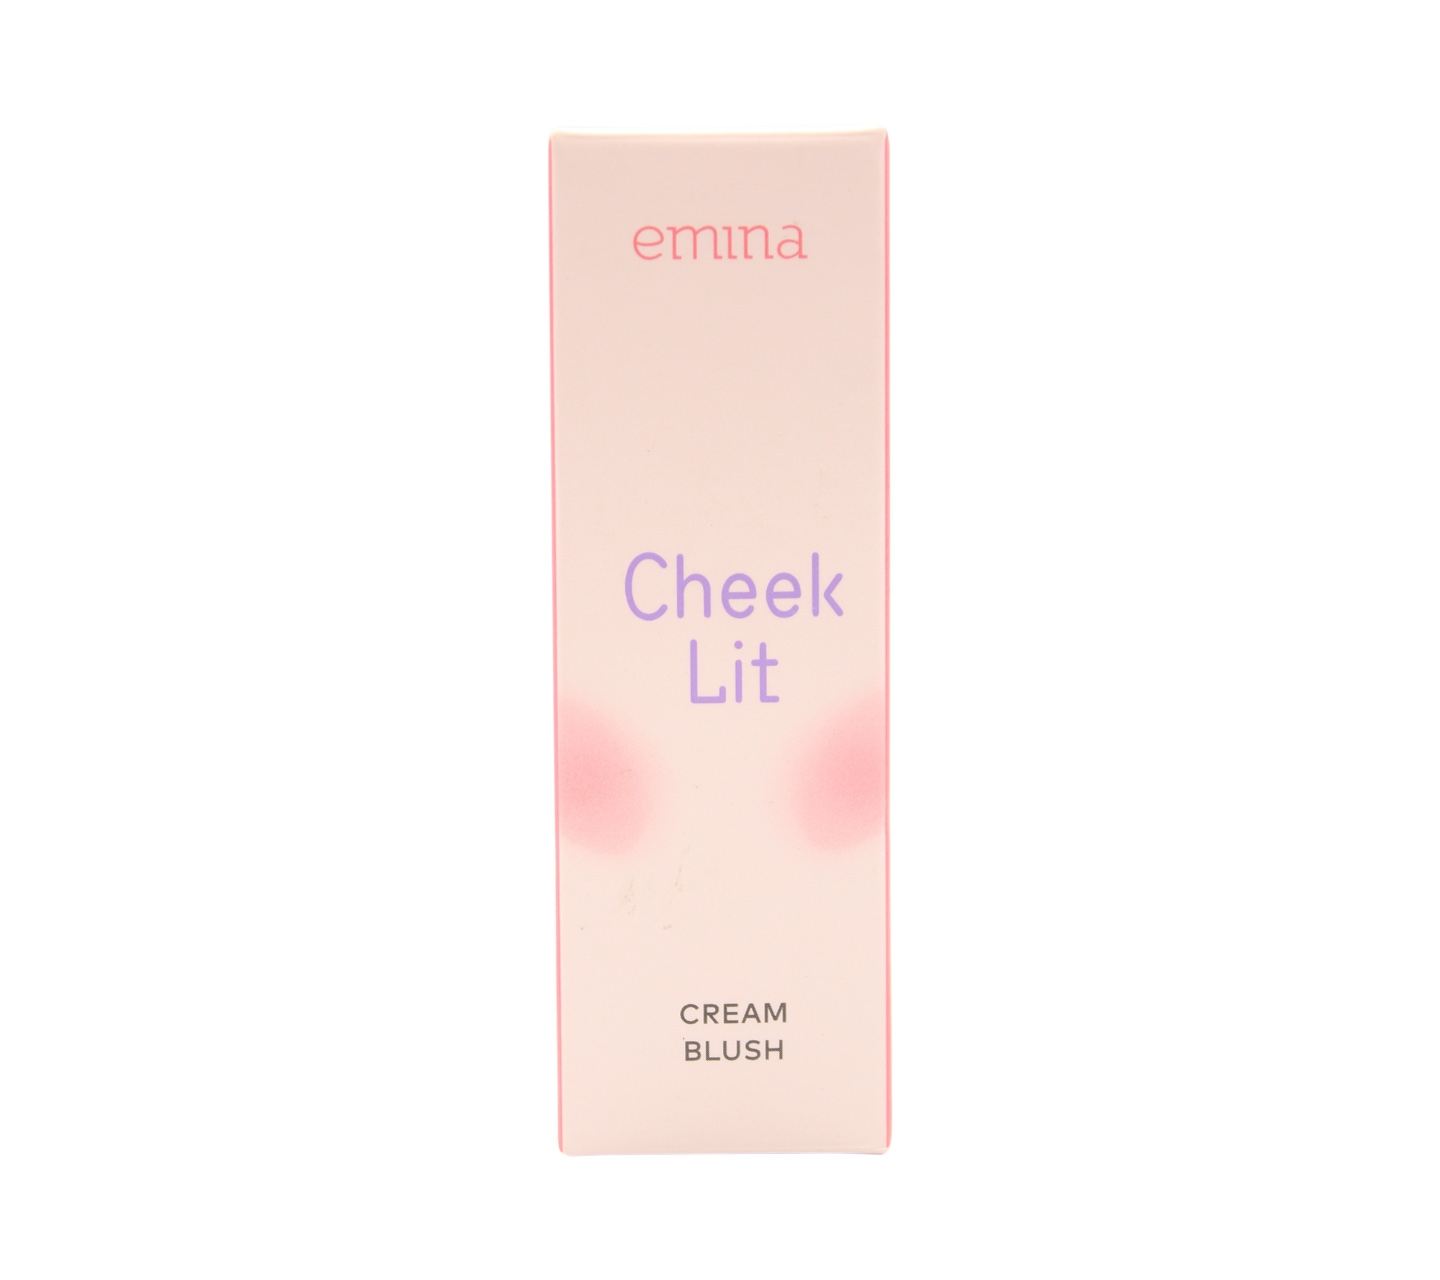 Emina Cheek Lit Cream Blush Faces